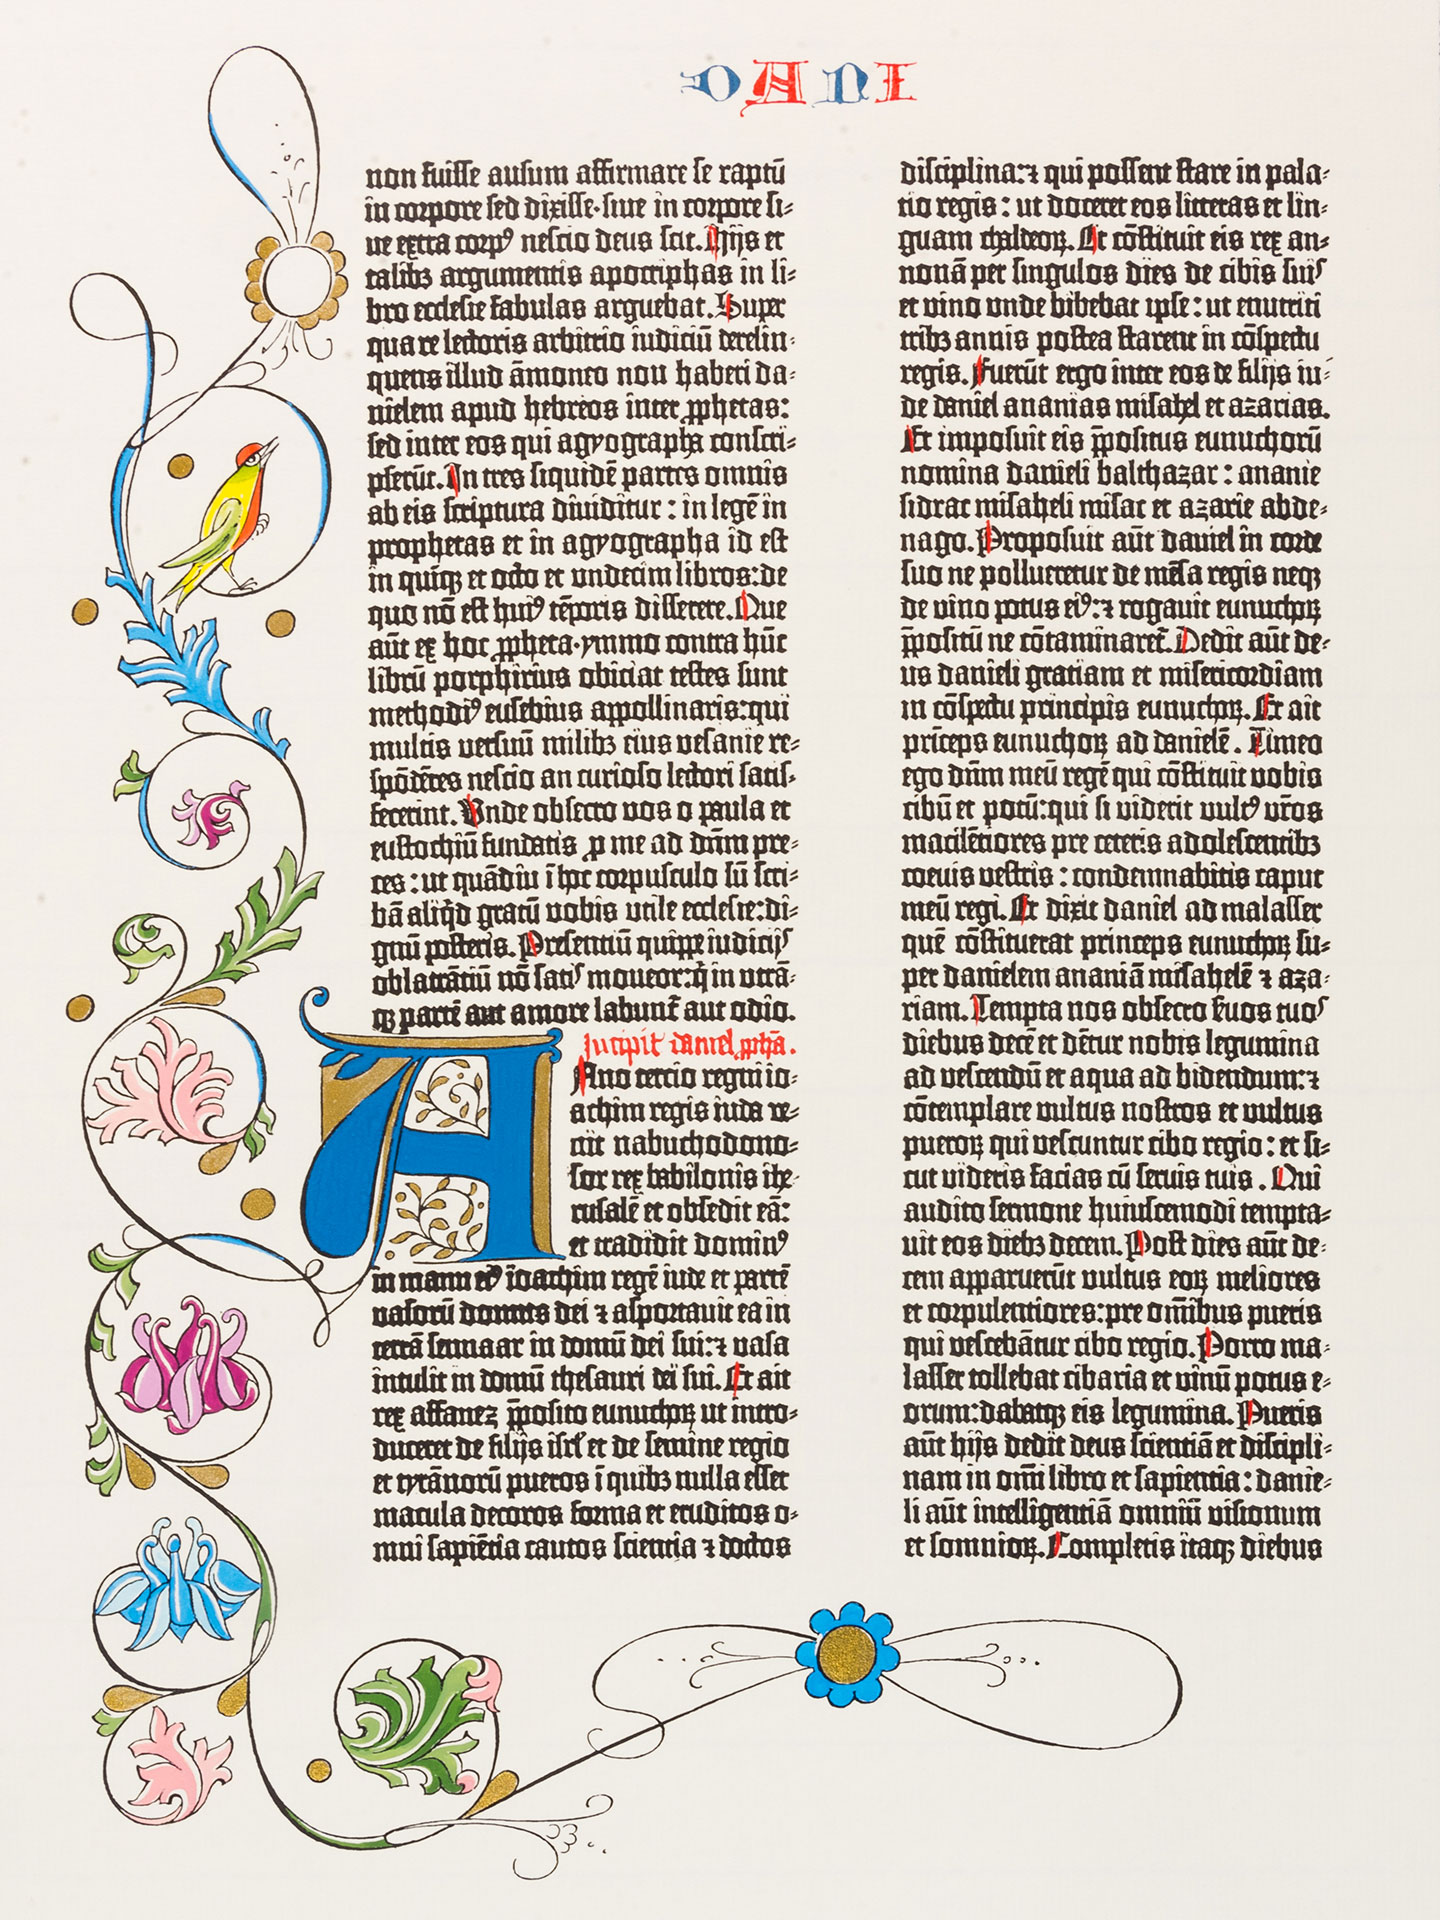 Das Buch Daniel. Pressendruck Gutenberg-Bibel